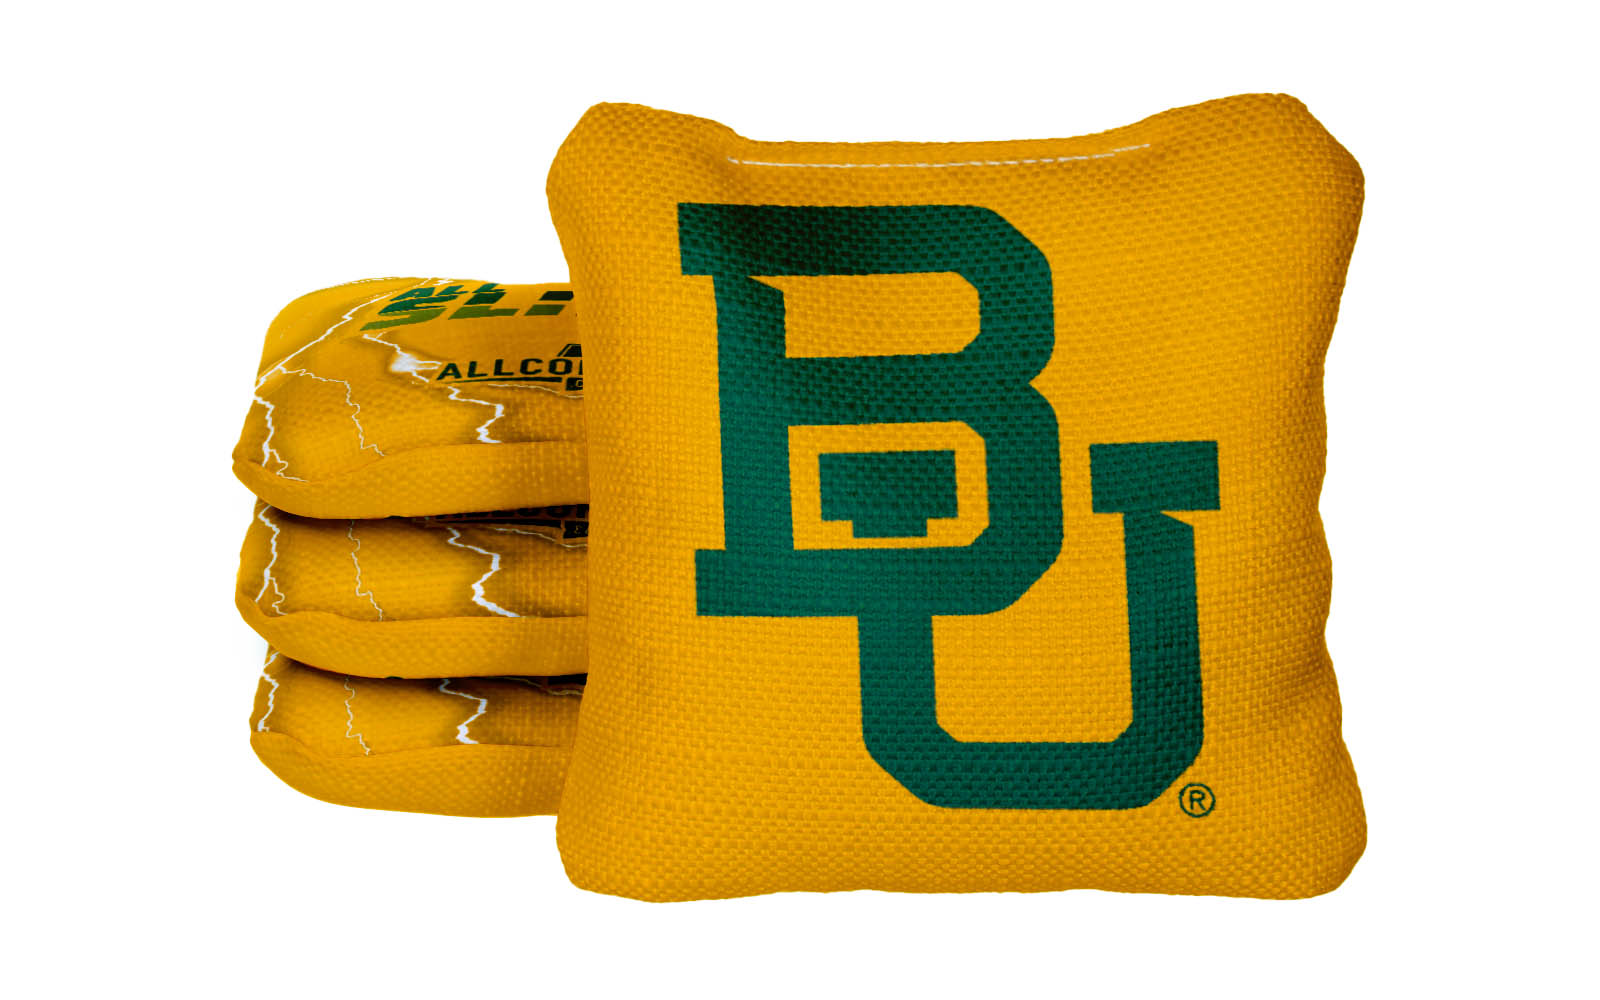 Officially Licensed Collegiate Cornhole Bags - All-Slide 2.0 - Set of 4 - Baylor University